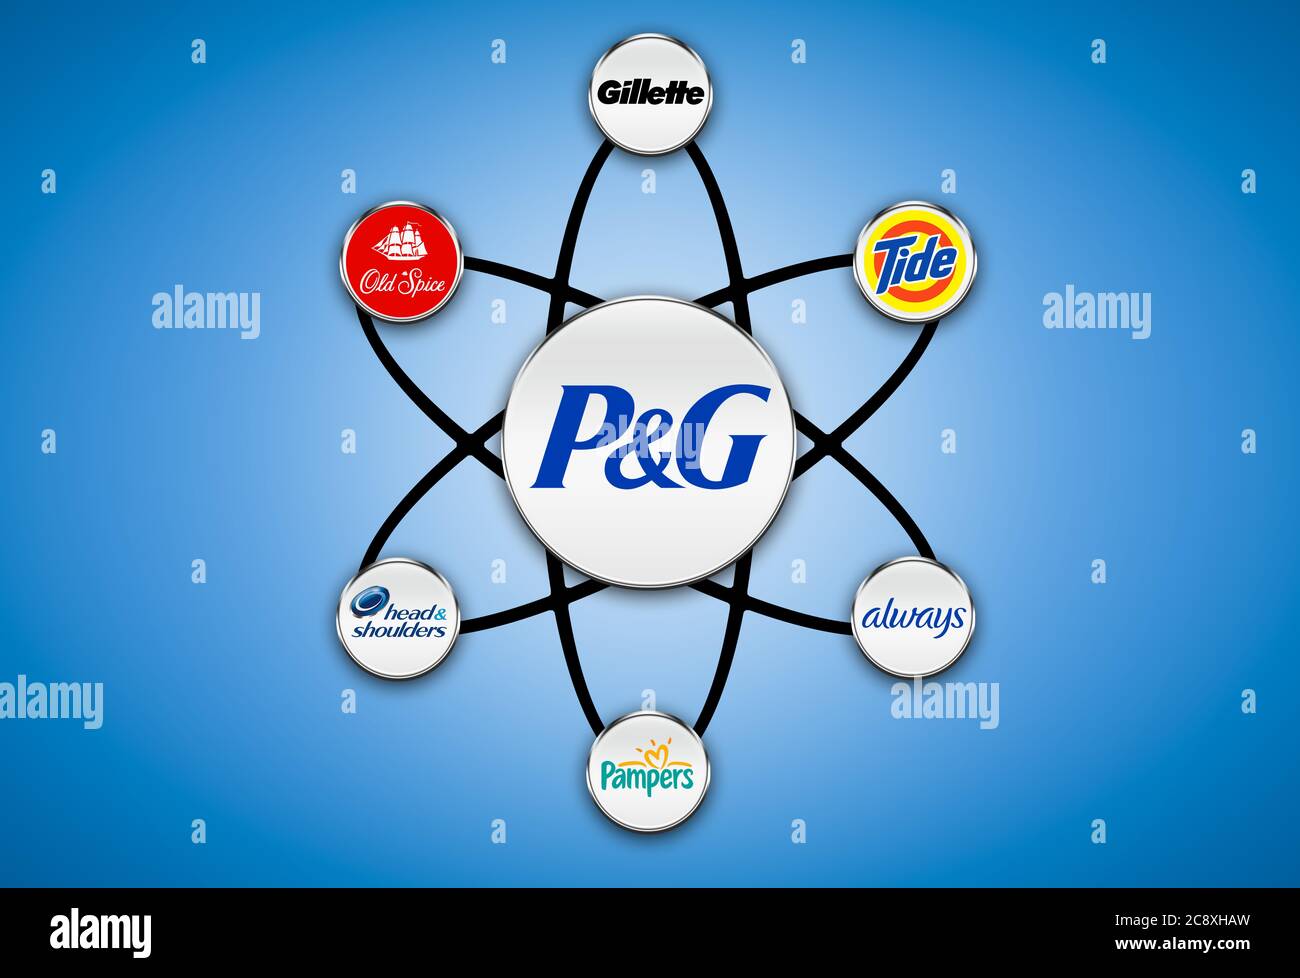 Procter And Gamble Brand Logos